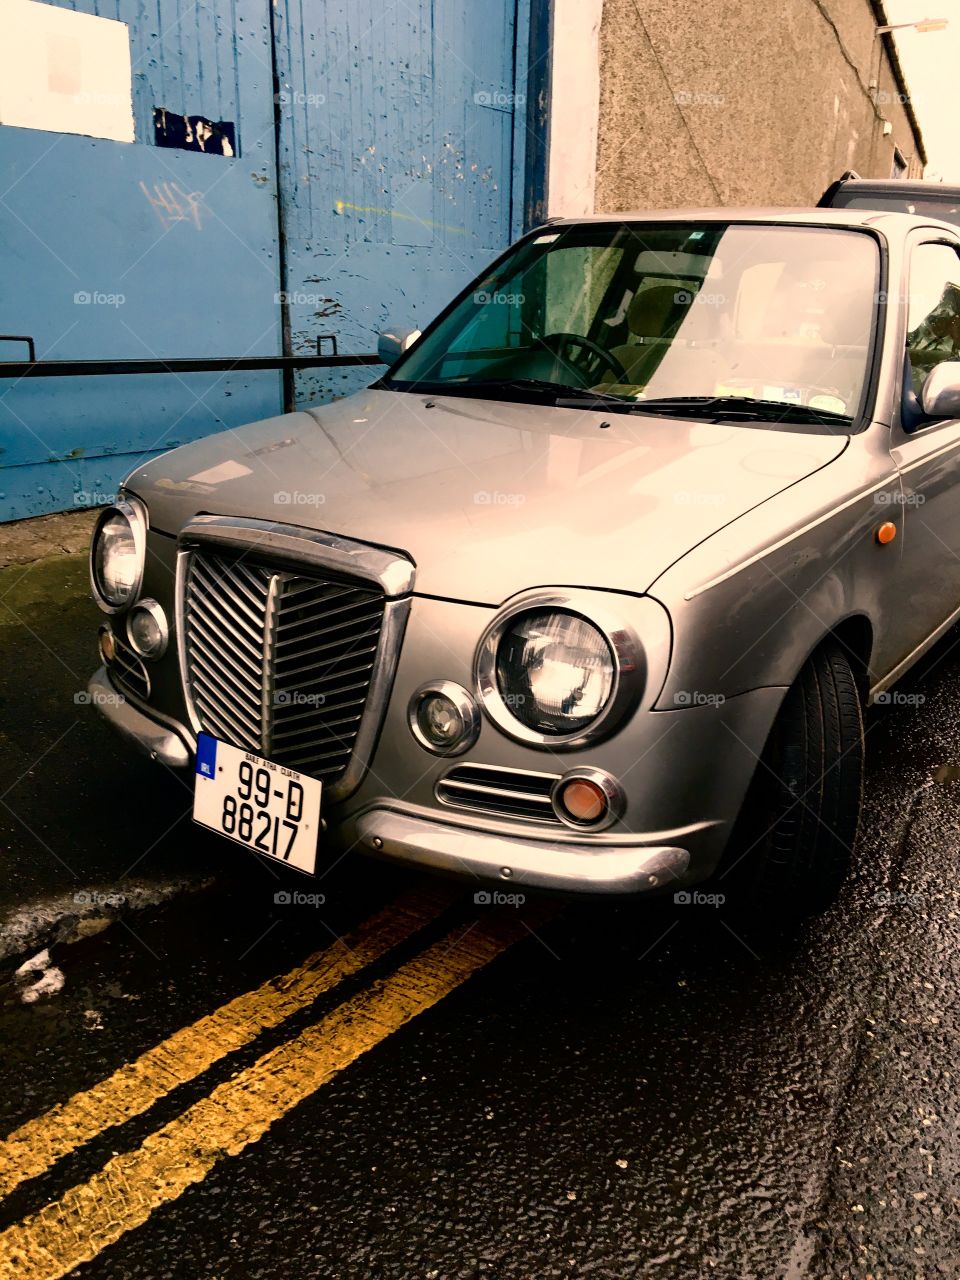 Dublin motor style 